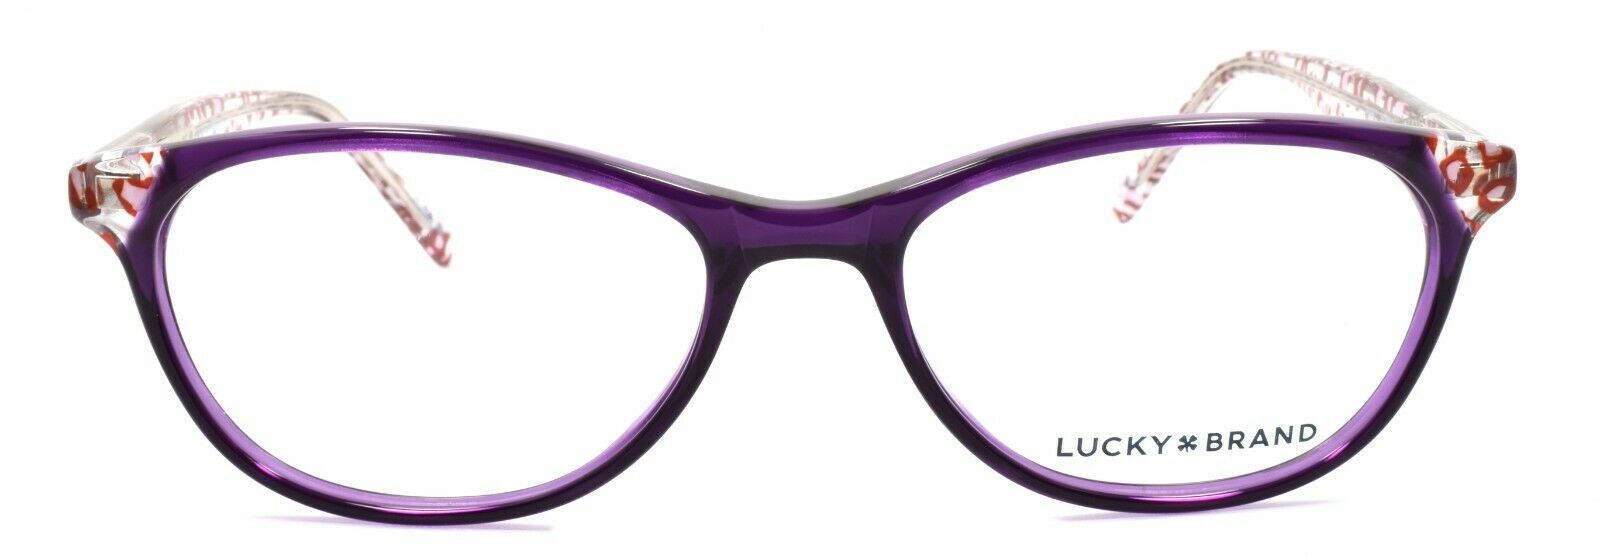 2-LUCKY BRAND D700 Women's Eyeglasses Frames 50-16-135 Purple + CASE-751286281989-IKSpecs